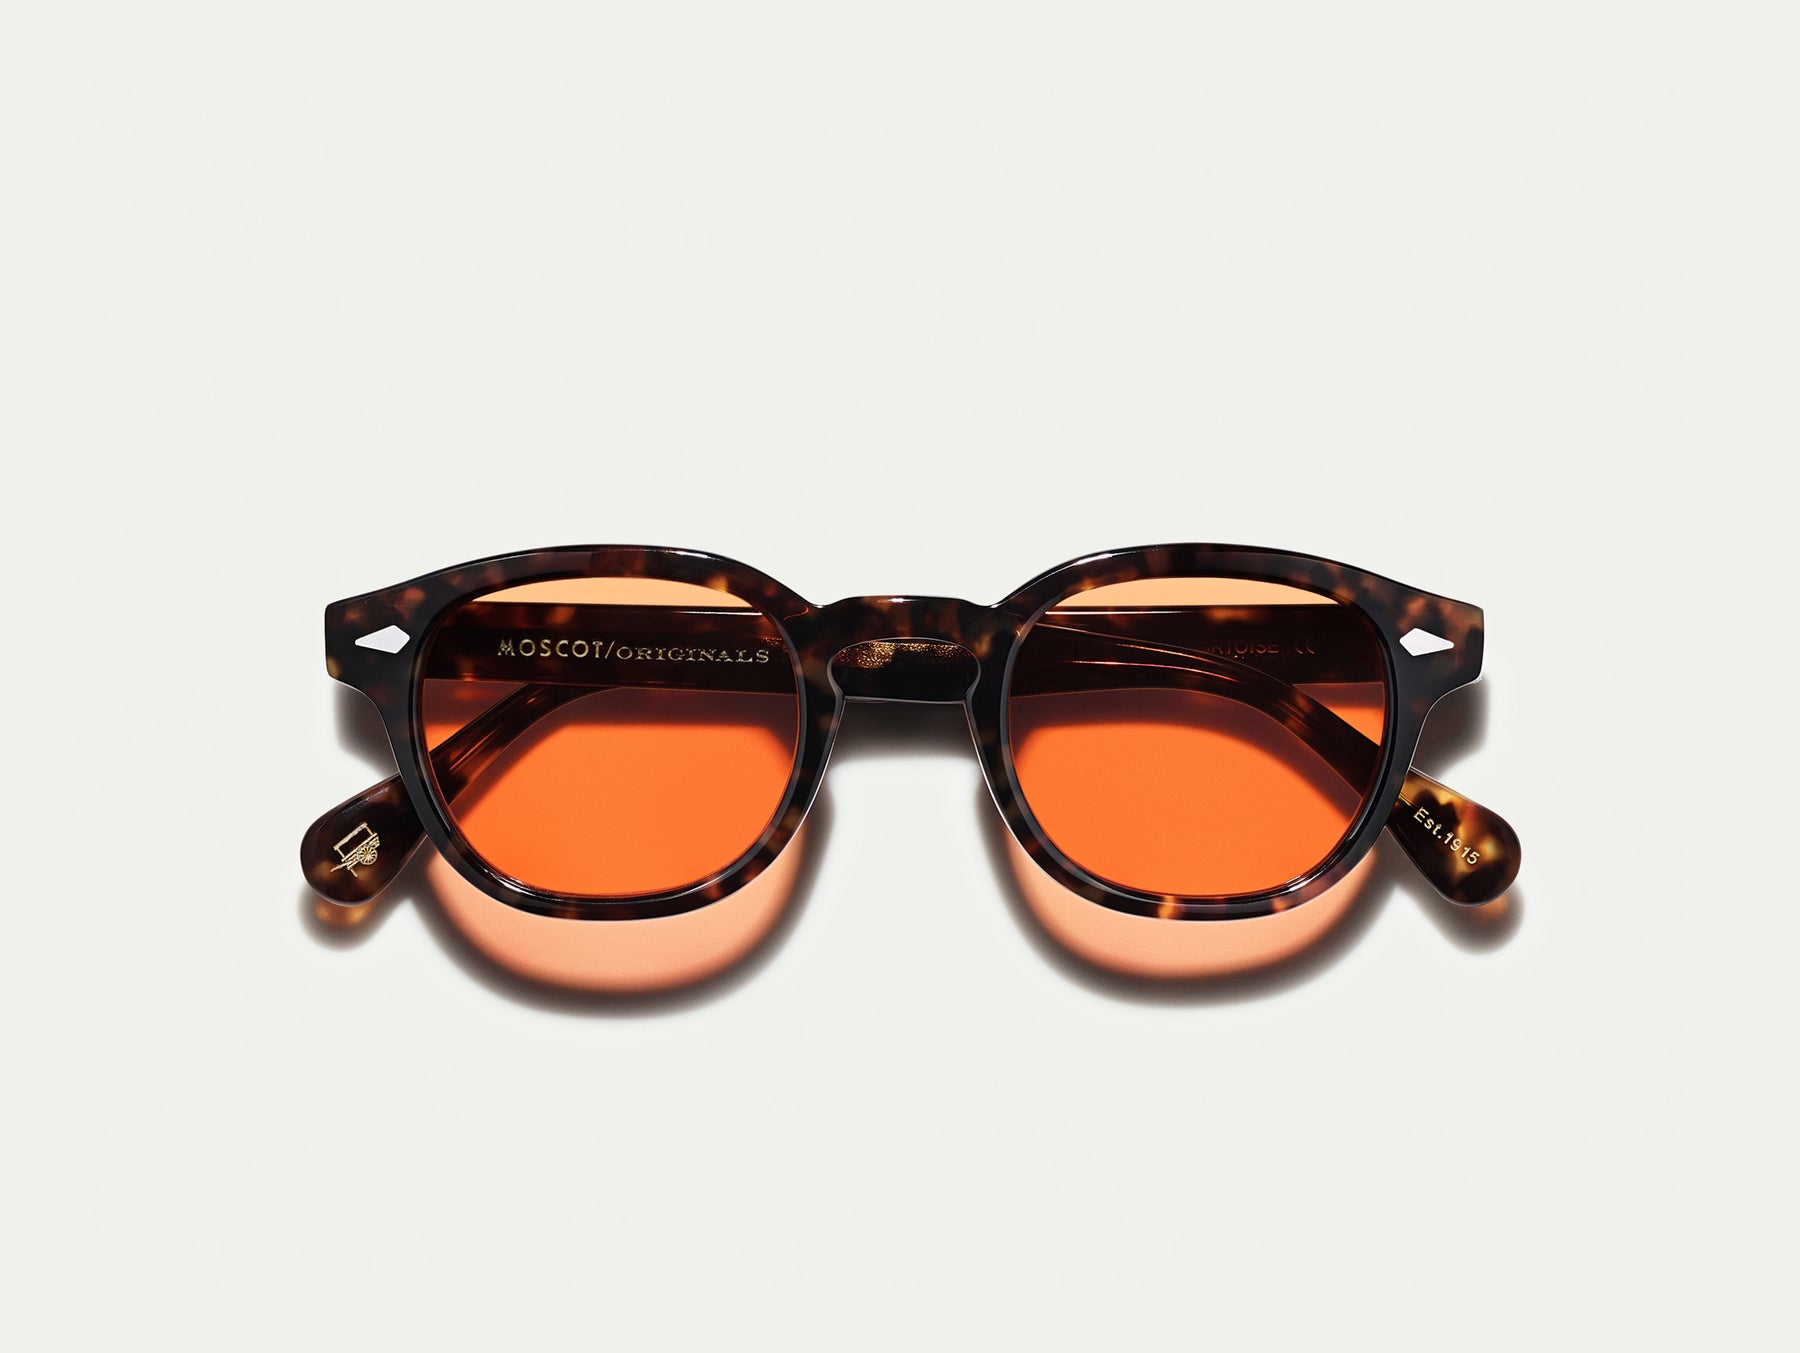 The LEMTOSH Tortoise with Woodstock Orange Tinted Lenses